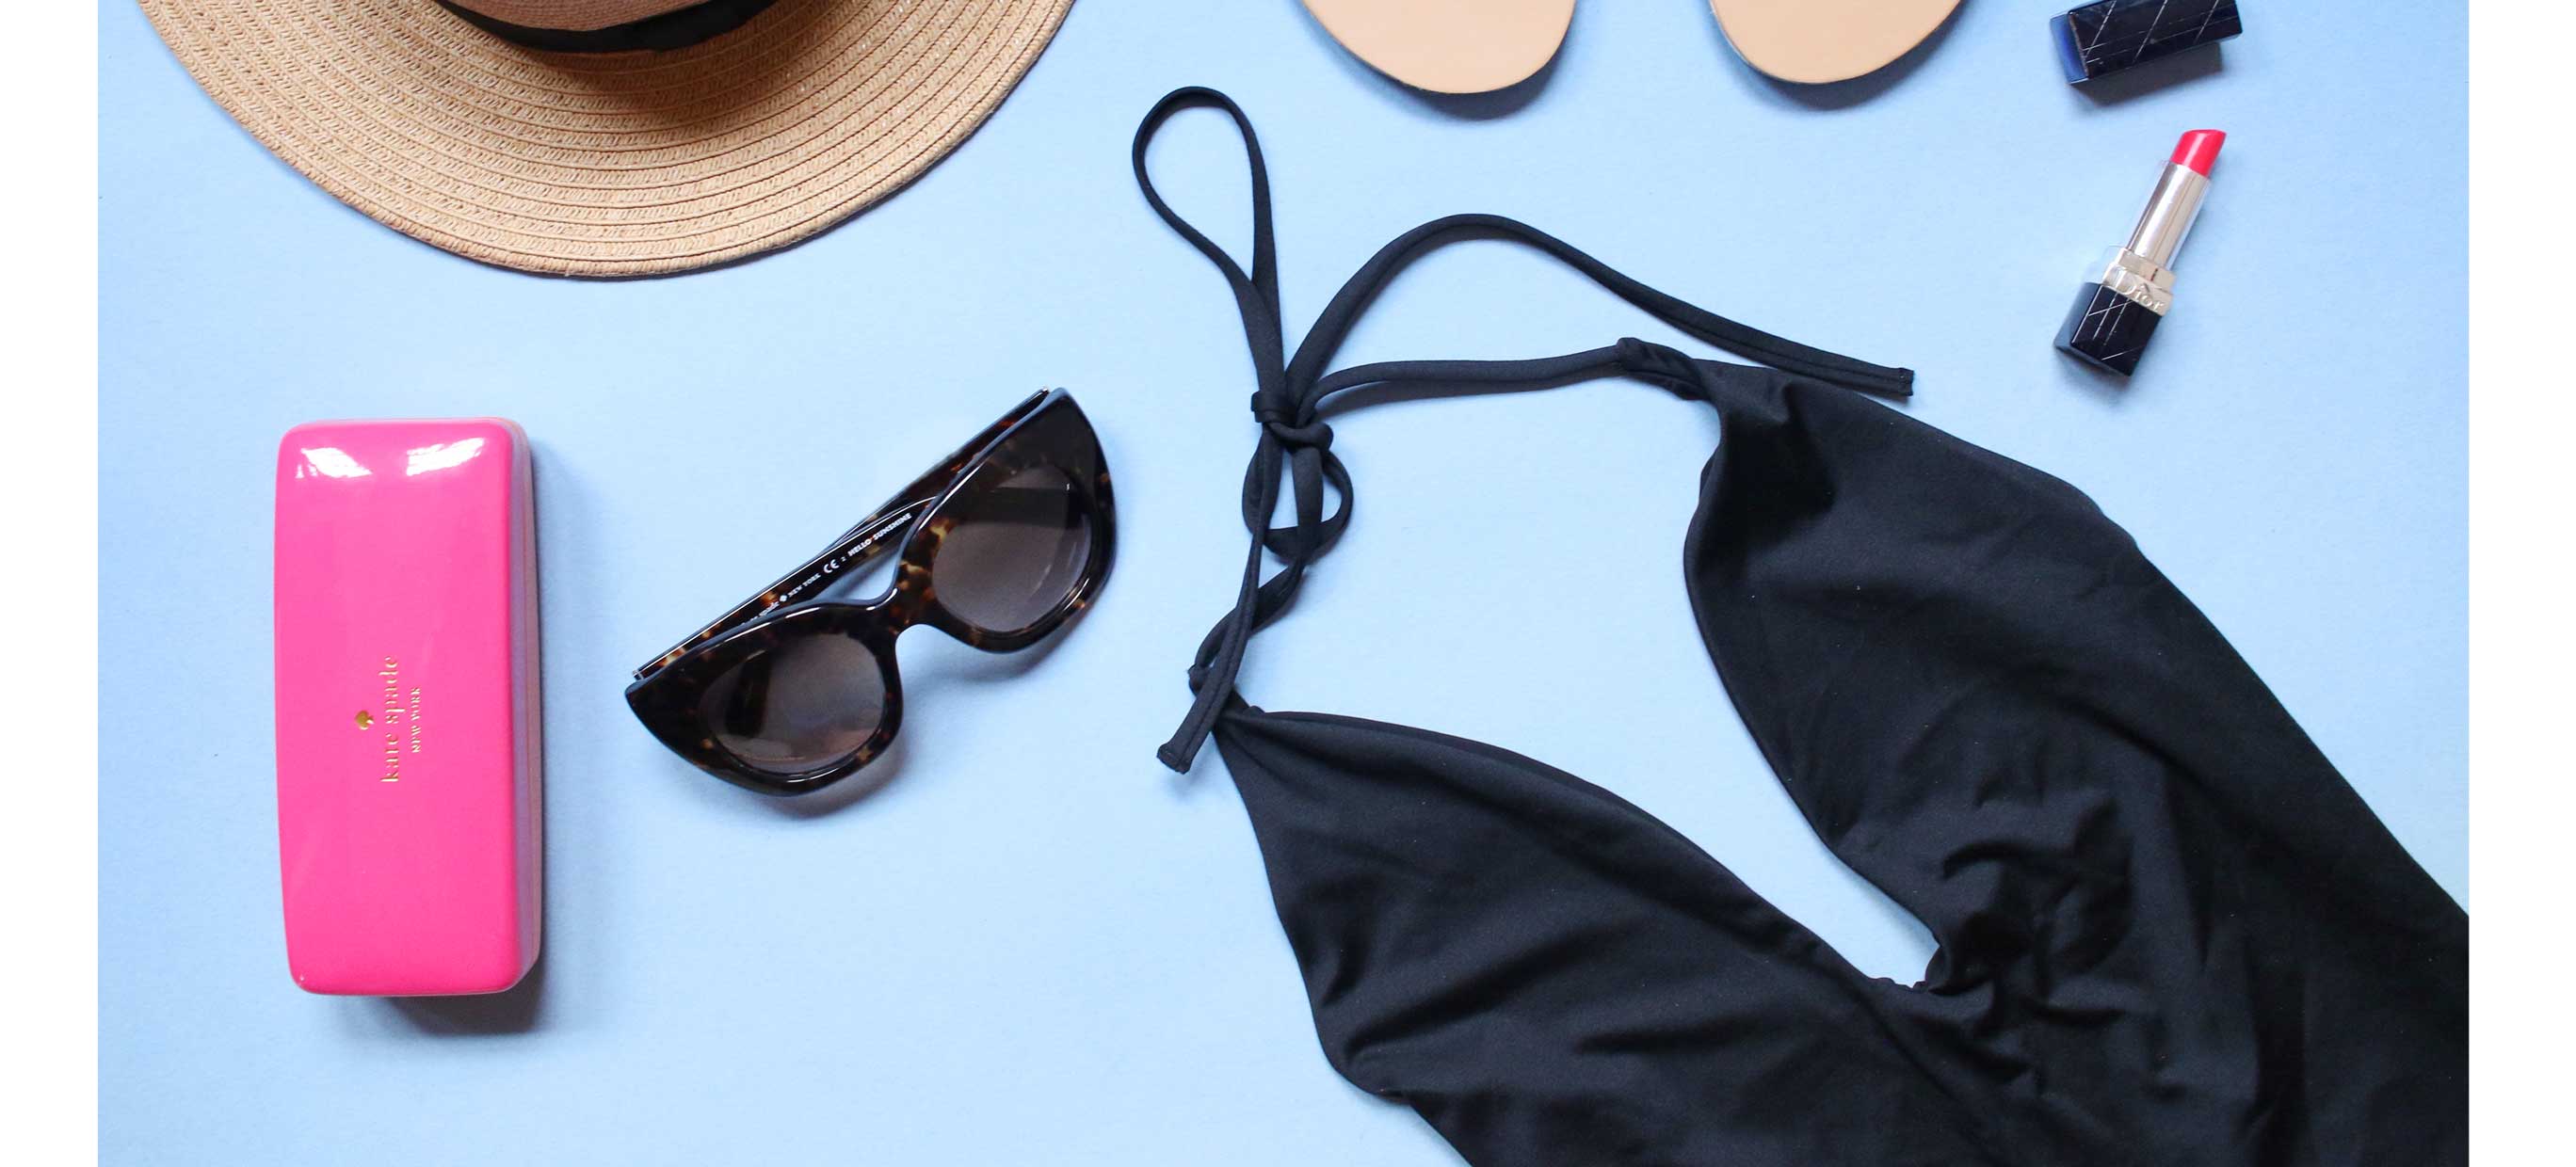 black one piece swimsuit, sunglasses, lipstick